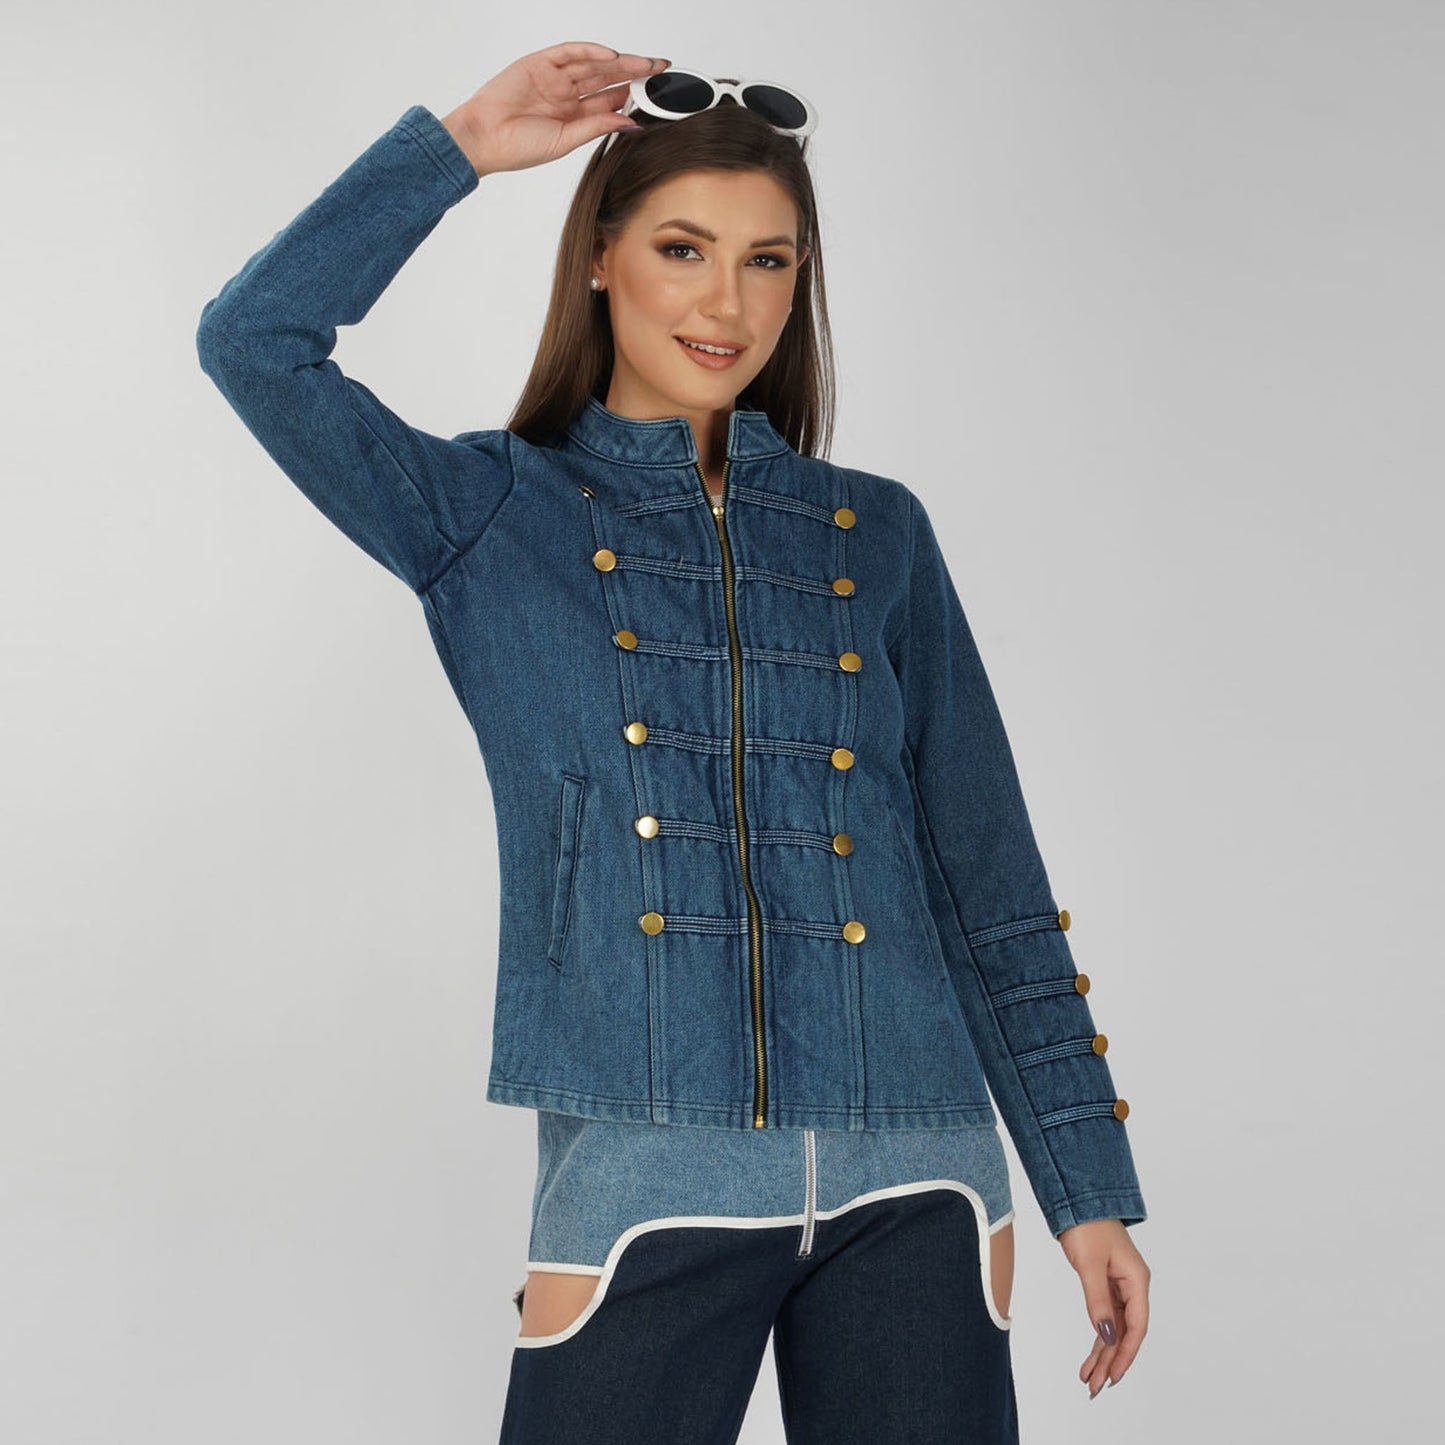 SLAY. Women's Military Denim Jacket